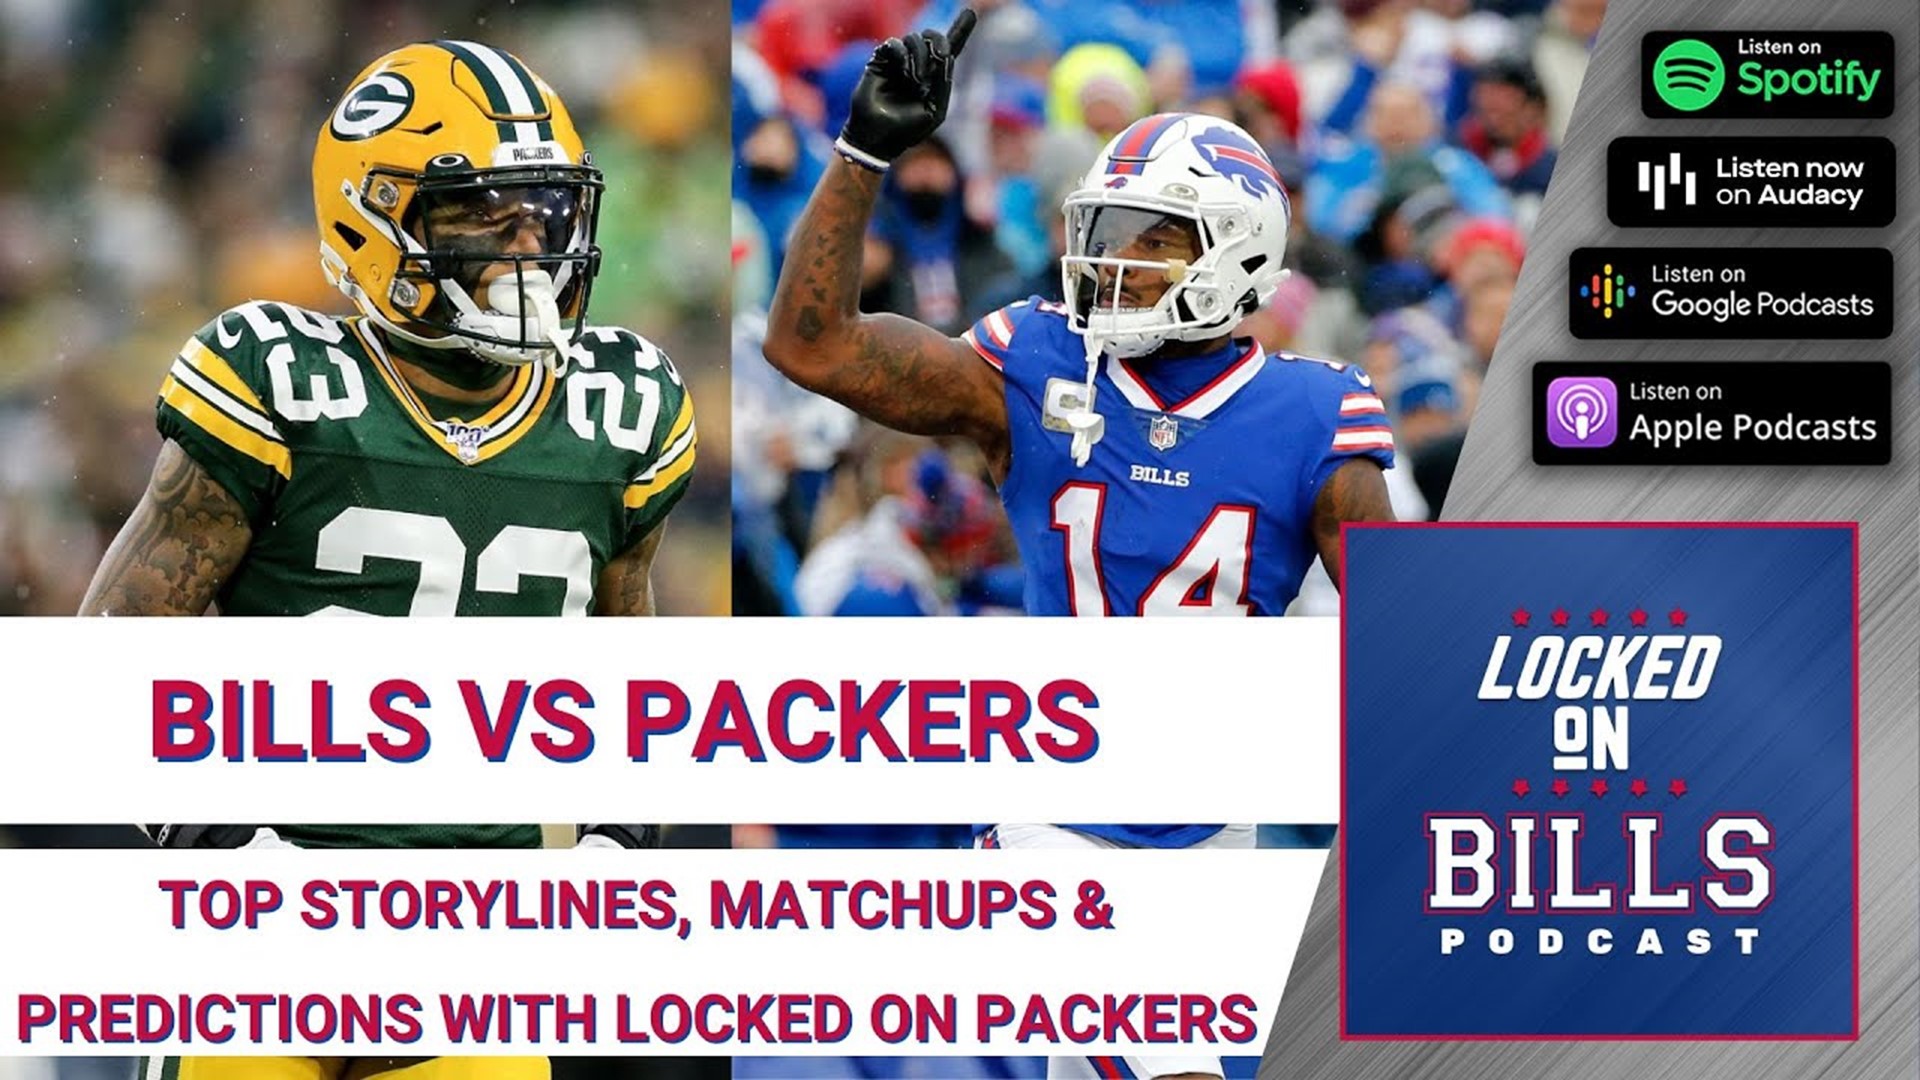 Crossover Thursday: Top Storylines, Matchups & Predictions in Buffalo Bills vs Green Bay Packers